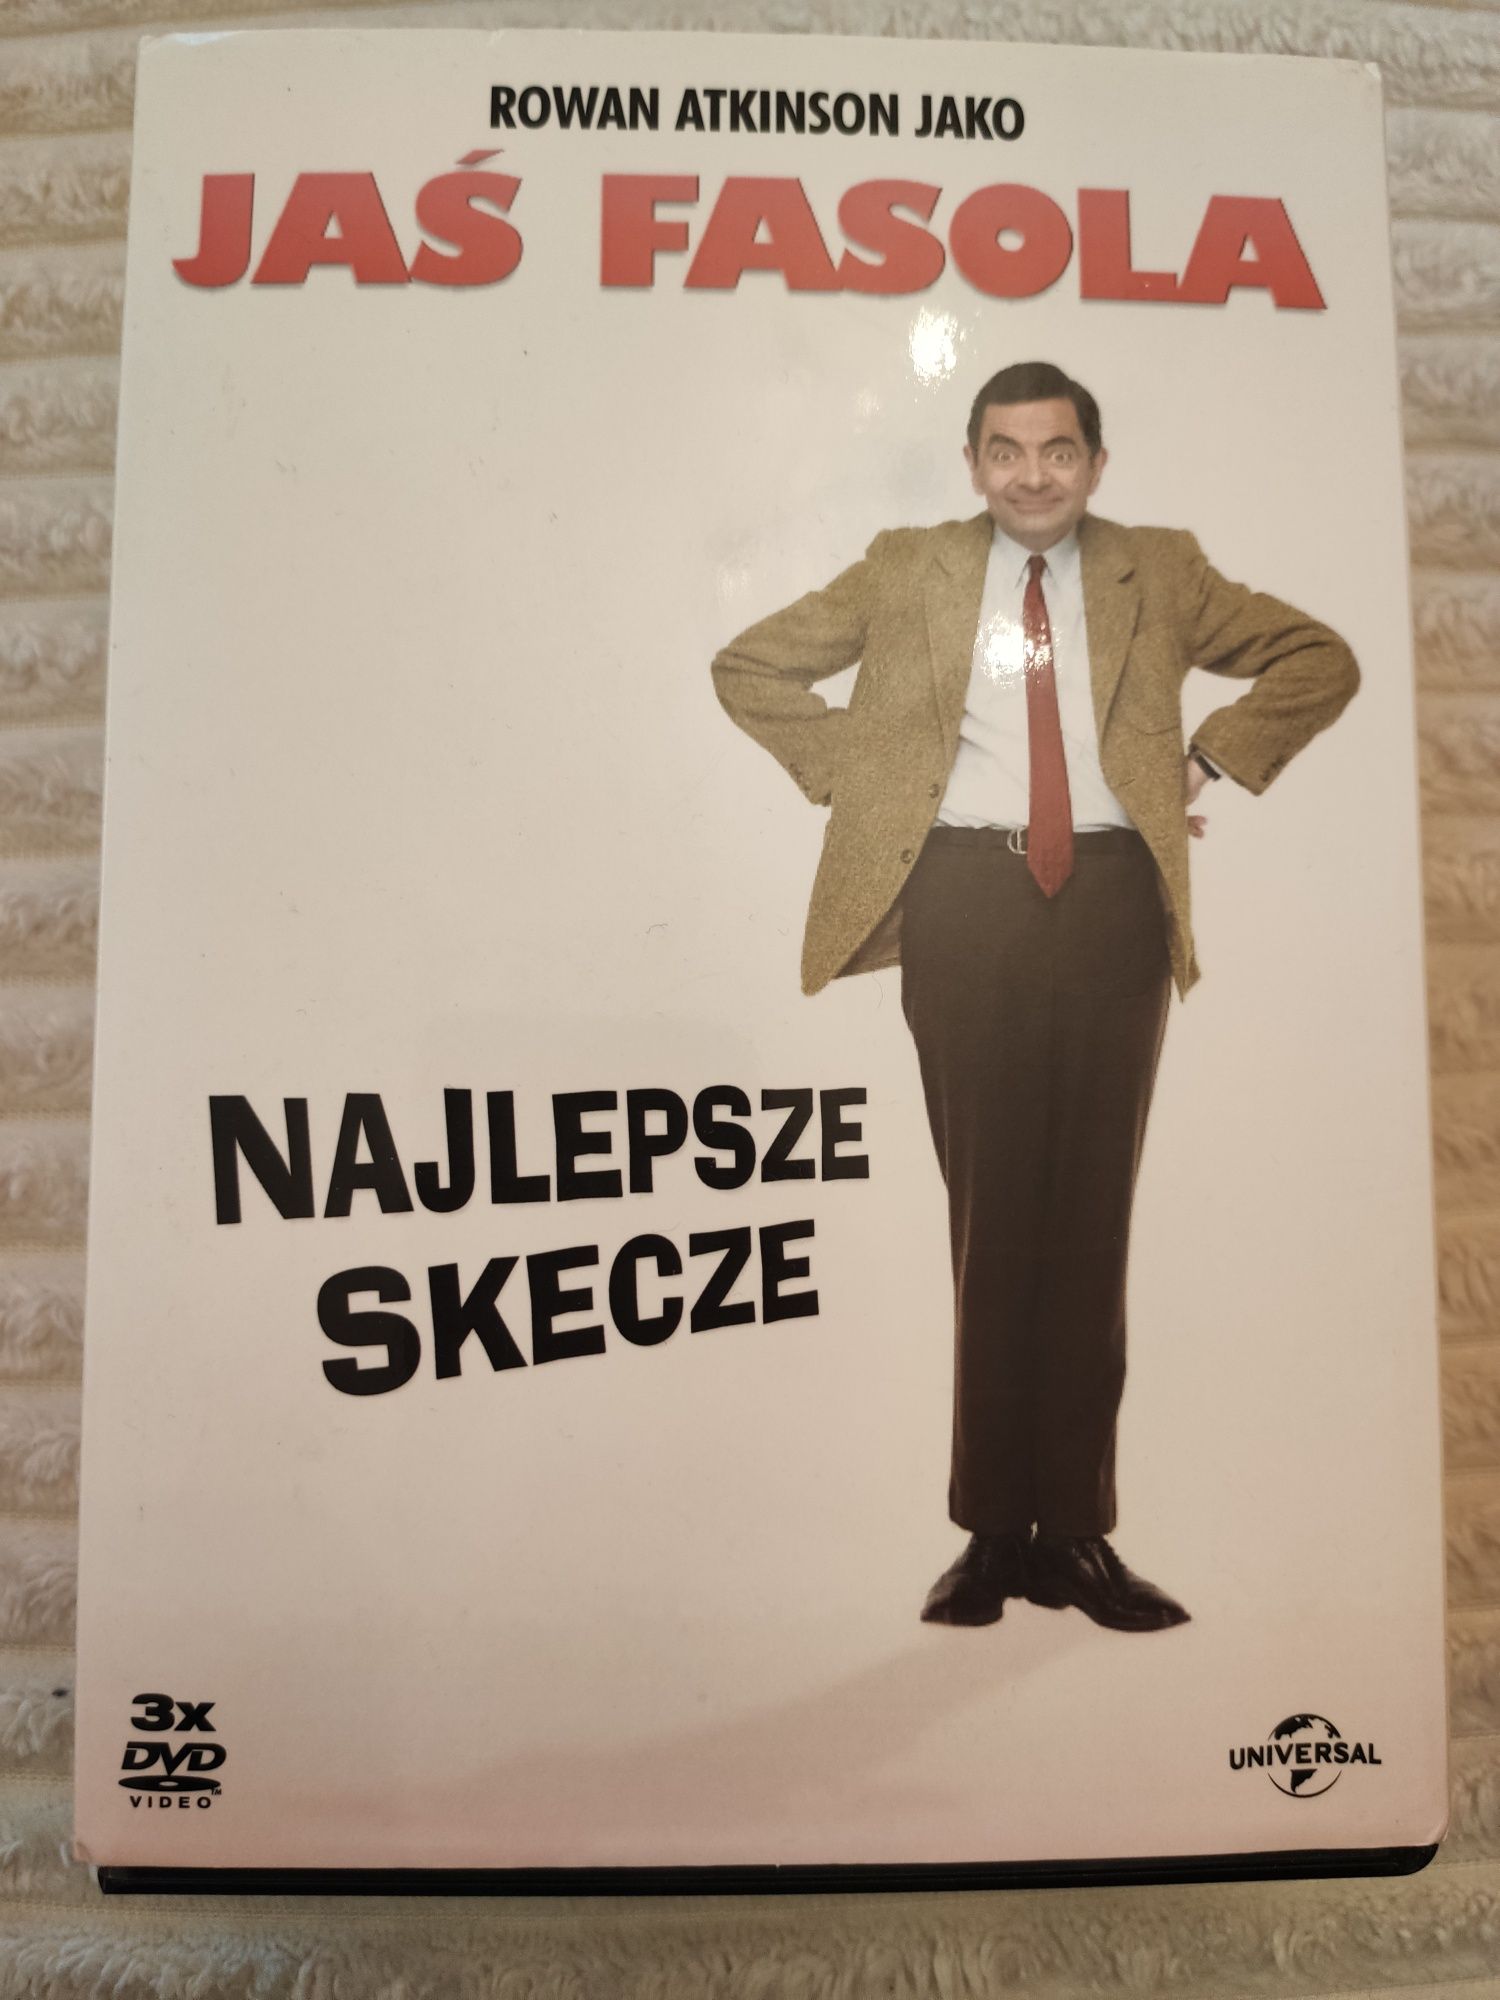 Jaś Fasola Dvd box